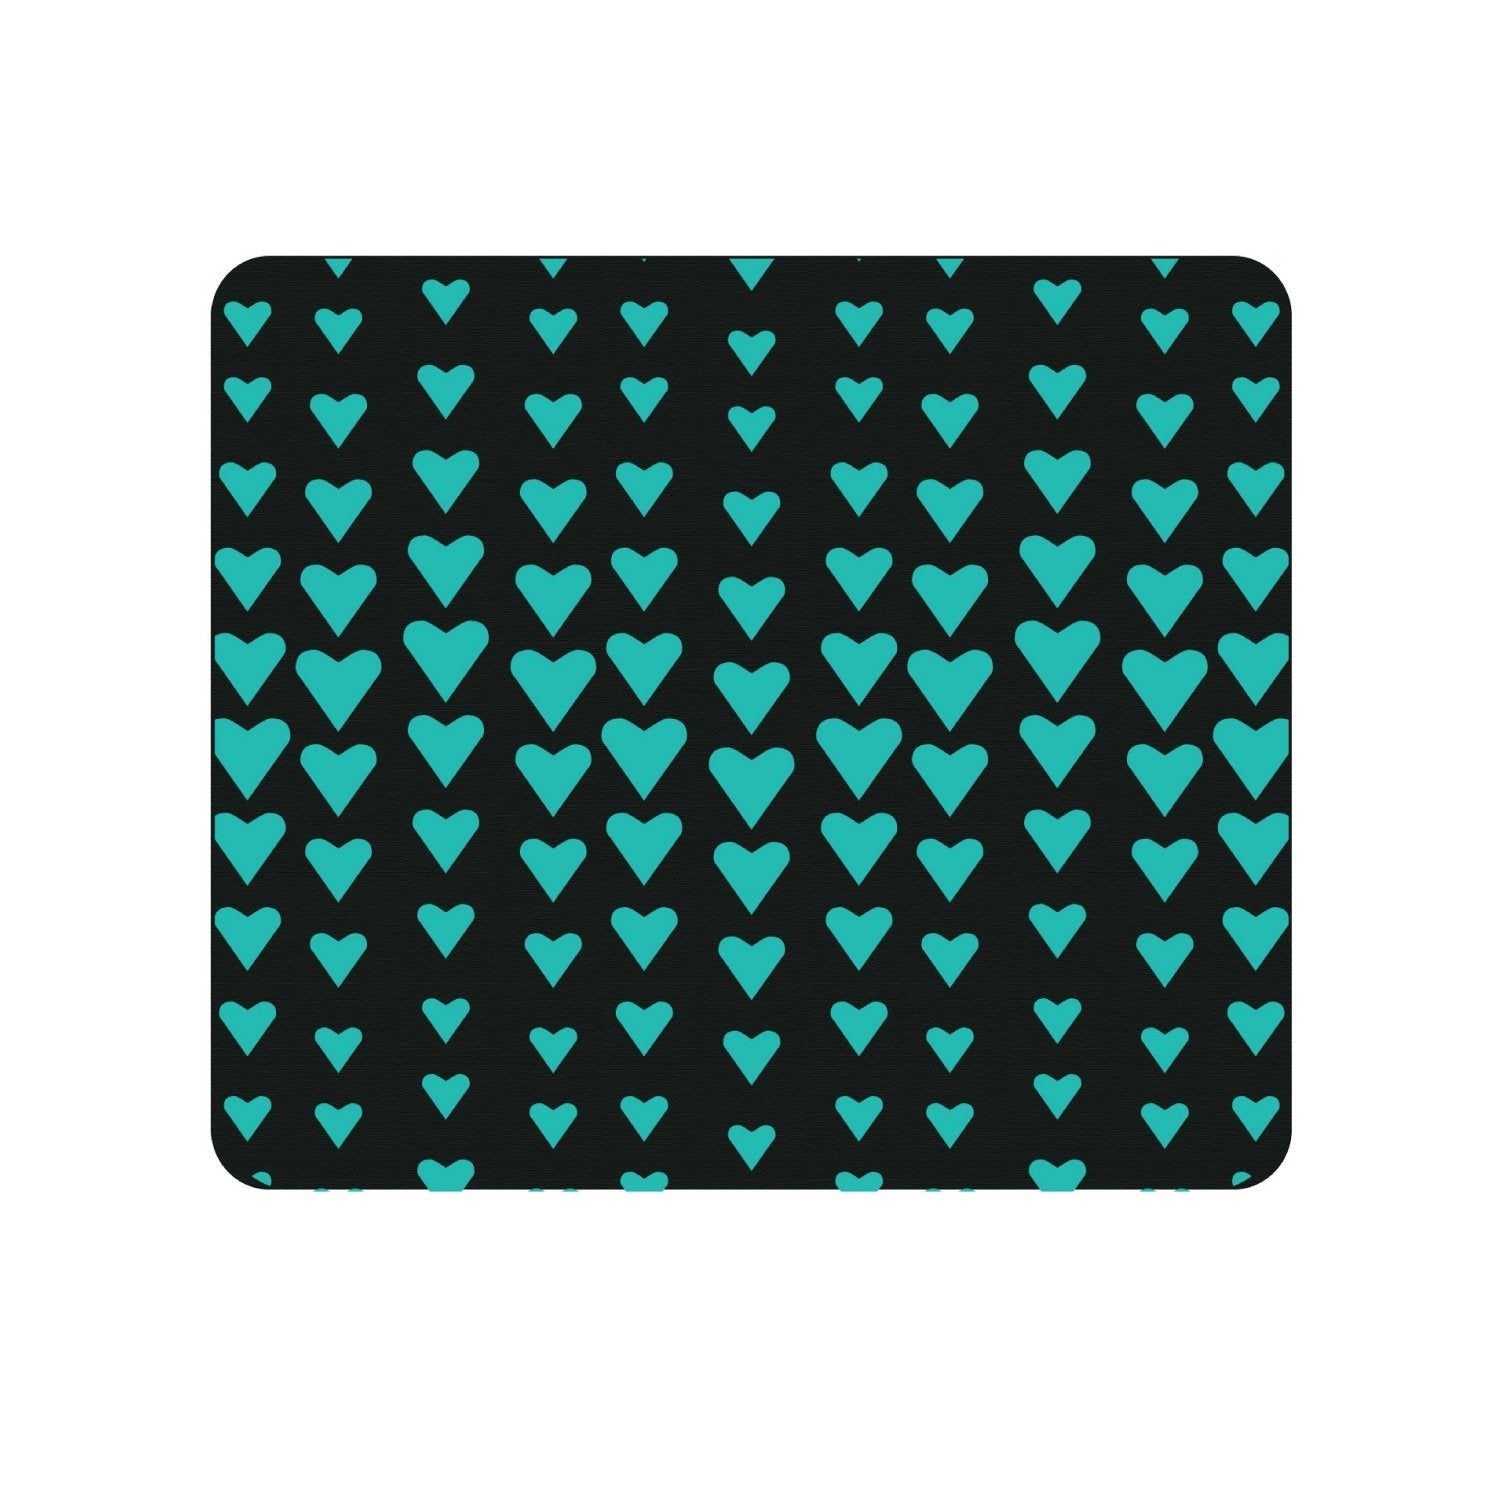 OTM Prints Black Mouse Pad, Falling Turquoise Hearts